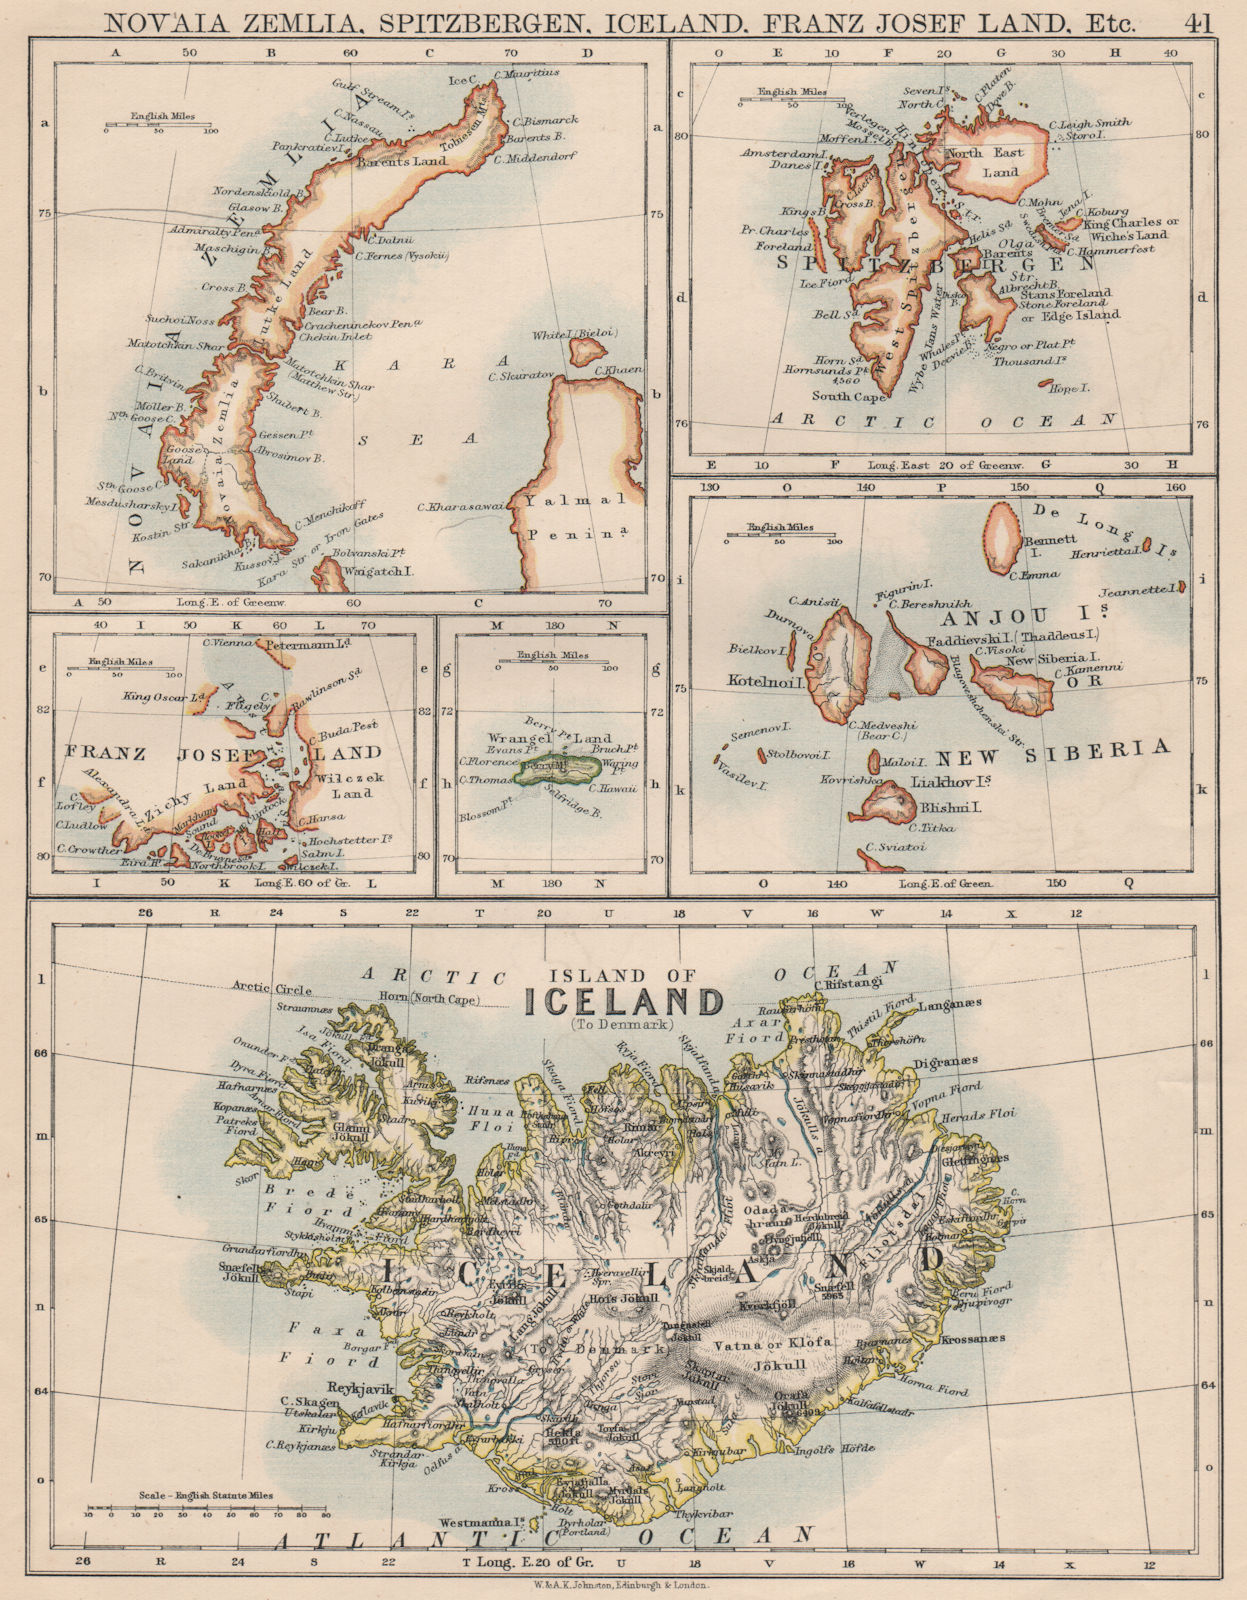 Associate Product ARCTIC ISLANDS.Iceland Spitsbergen Franz Josef Land Novaya Zemlya 1895 old map